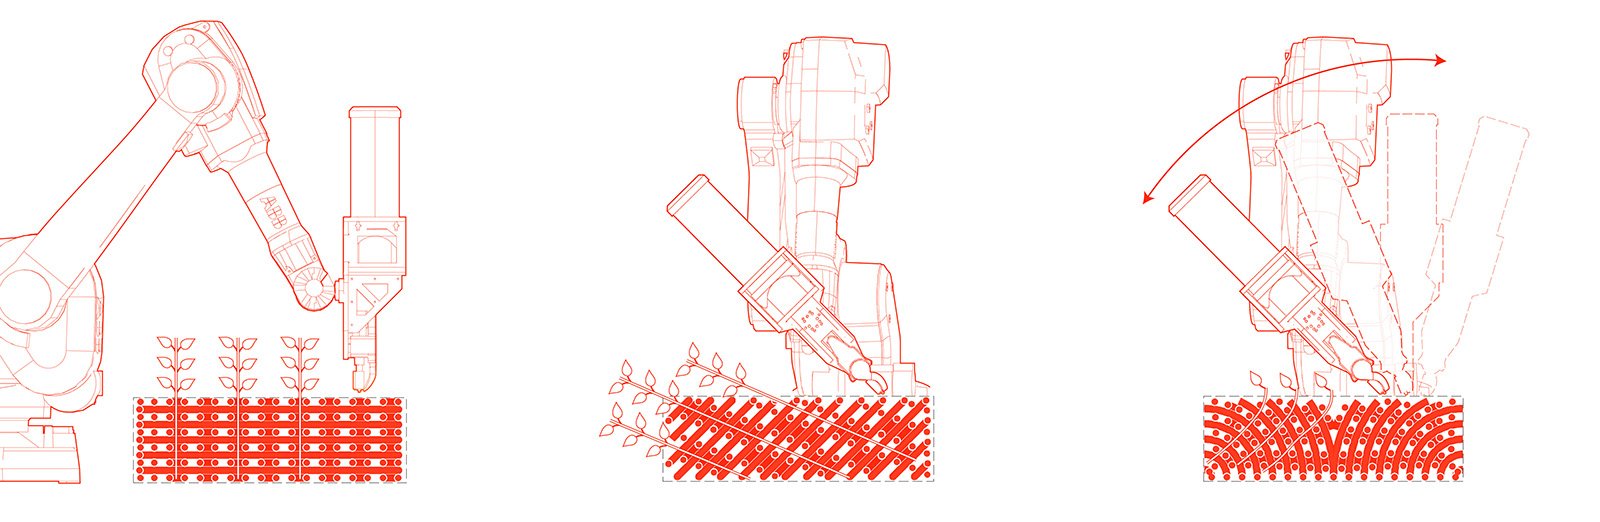 210608_robot arm printing diagram [Converted]-03.jpg